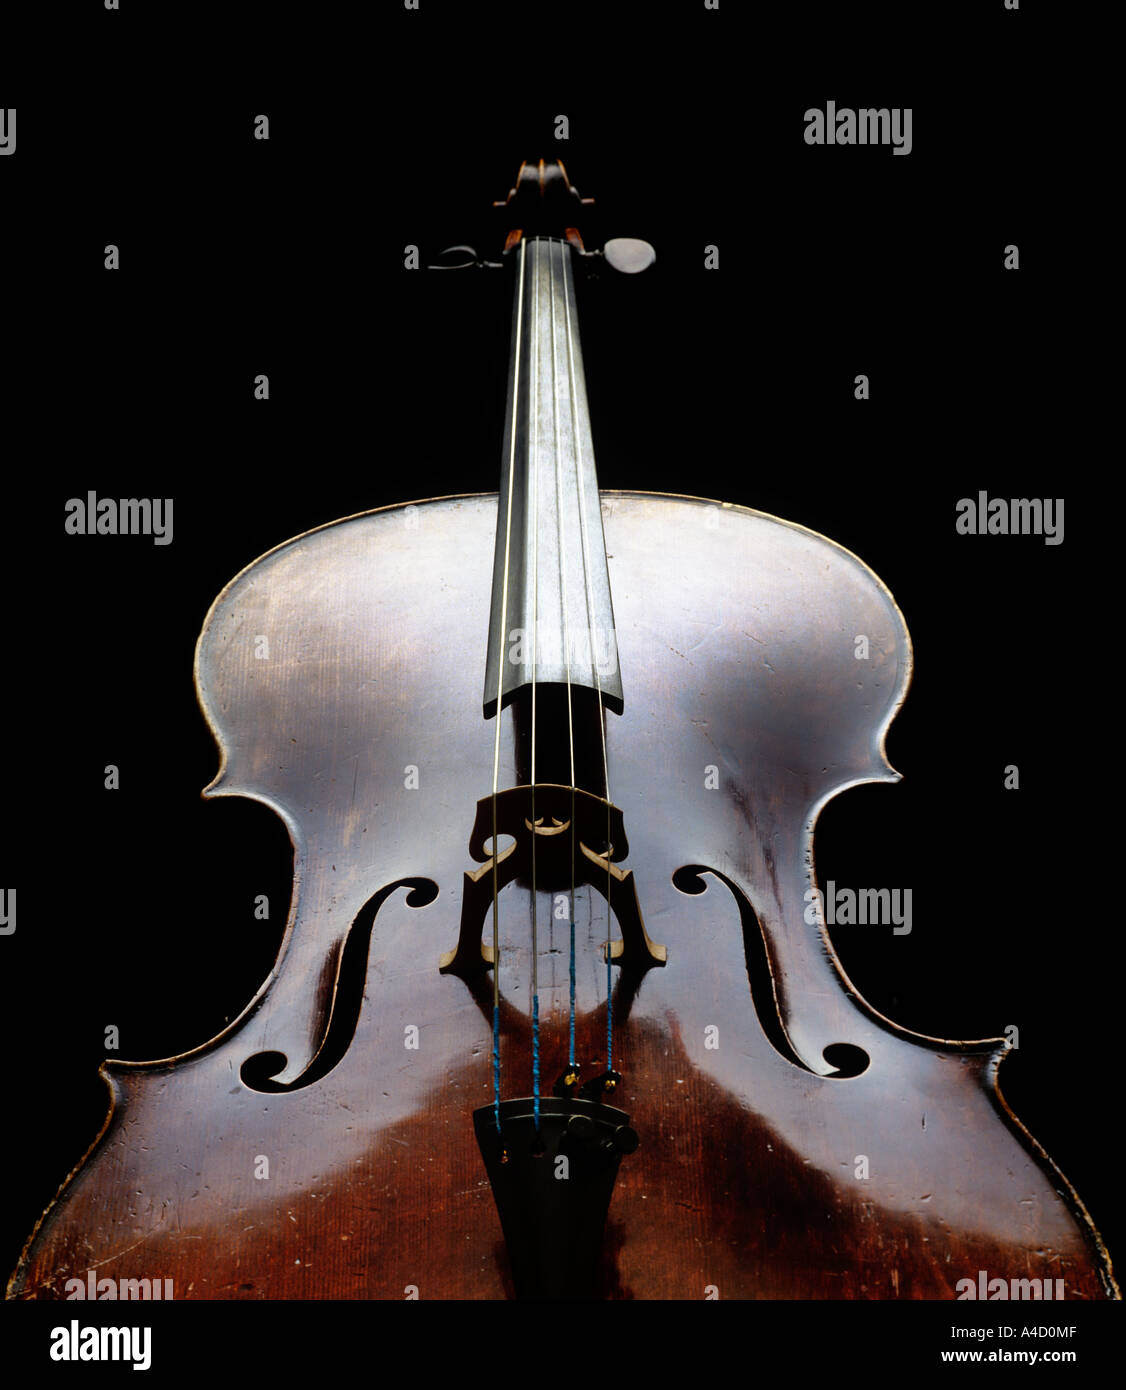 Cello, black background. Stock Photo